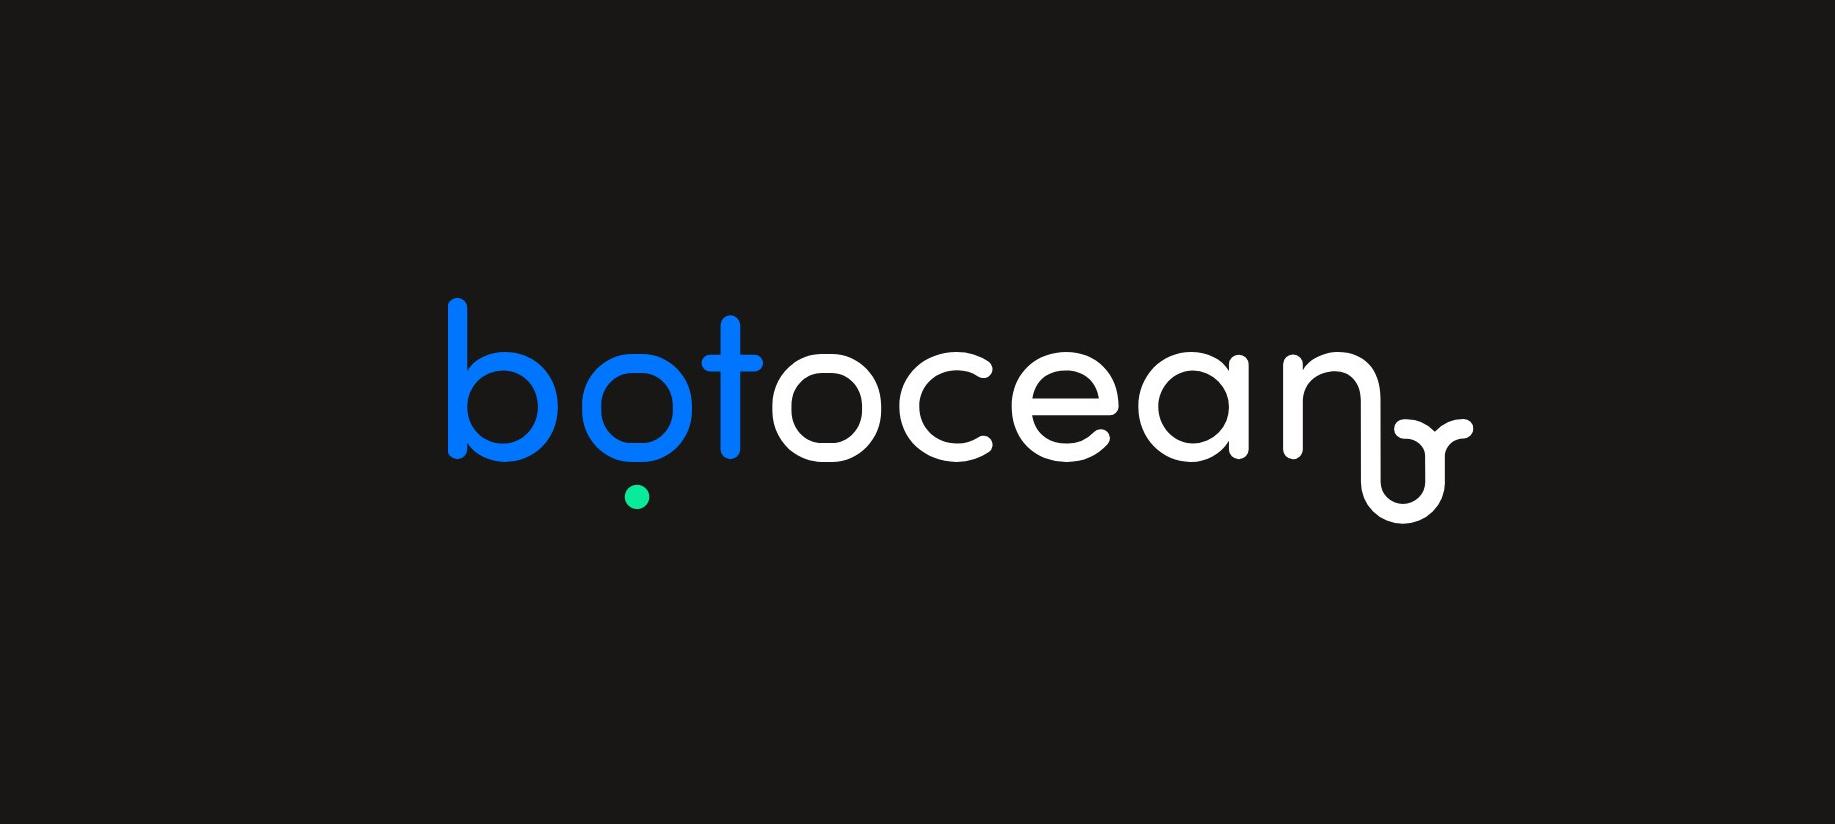 how to buy bot ocean bots crypto